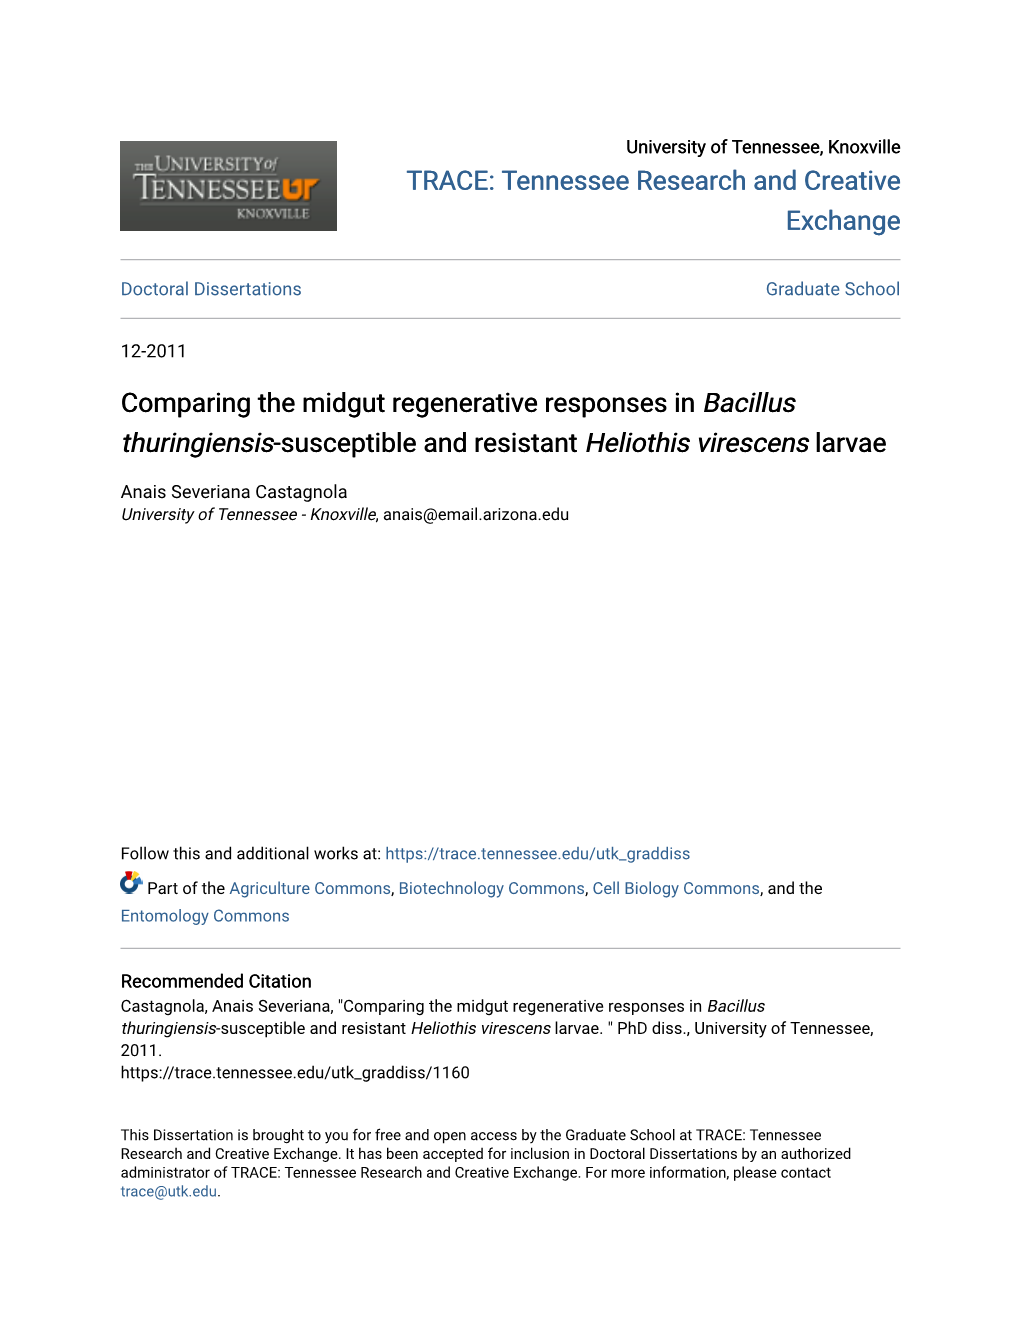 Comparing the Midgut Regenerative Responses in Bacillus Thuringiensis-Susceptible and Resistant Heliothis Virescens Larvae